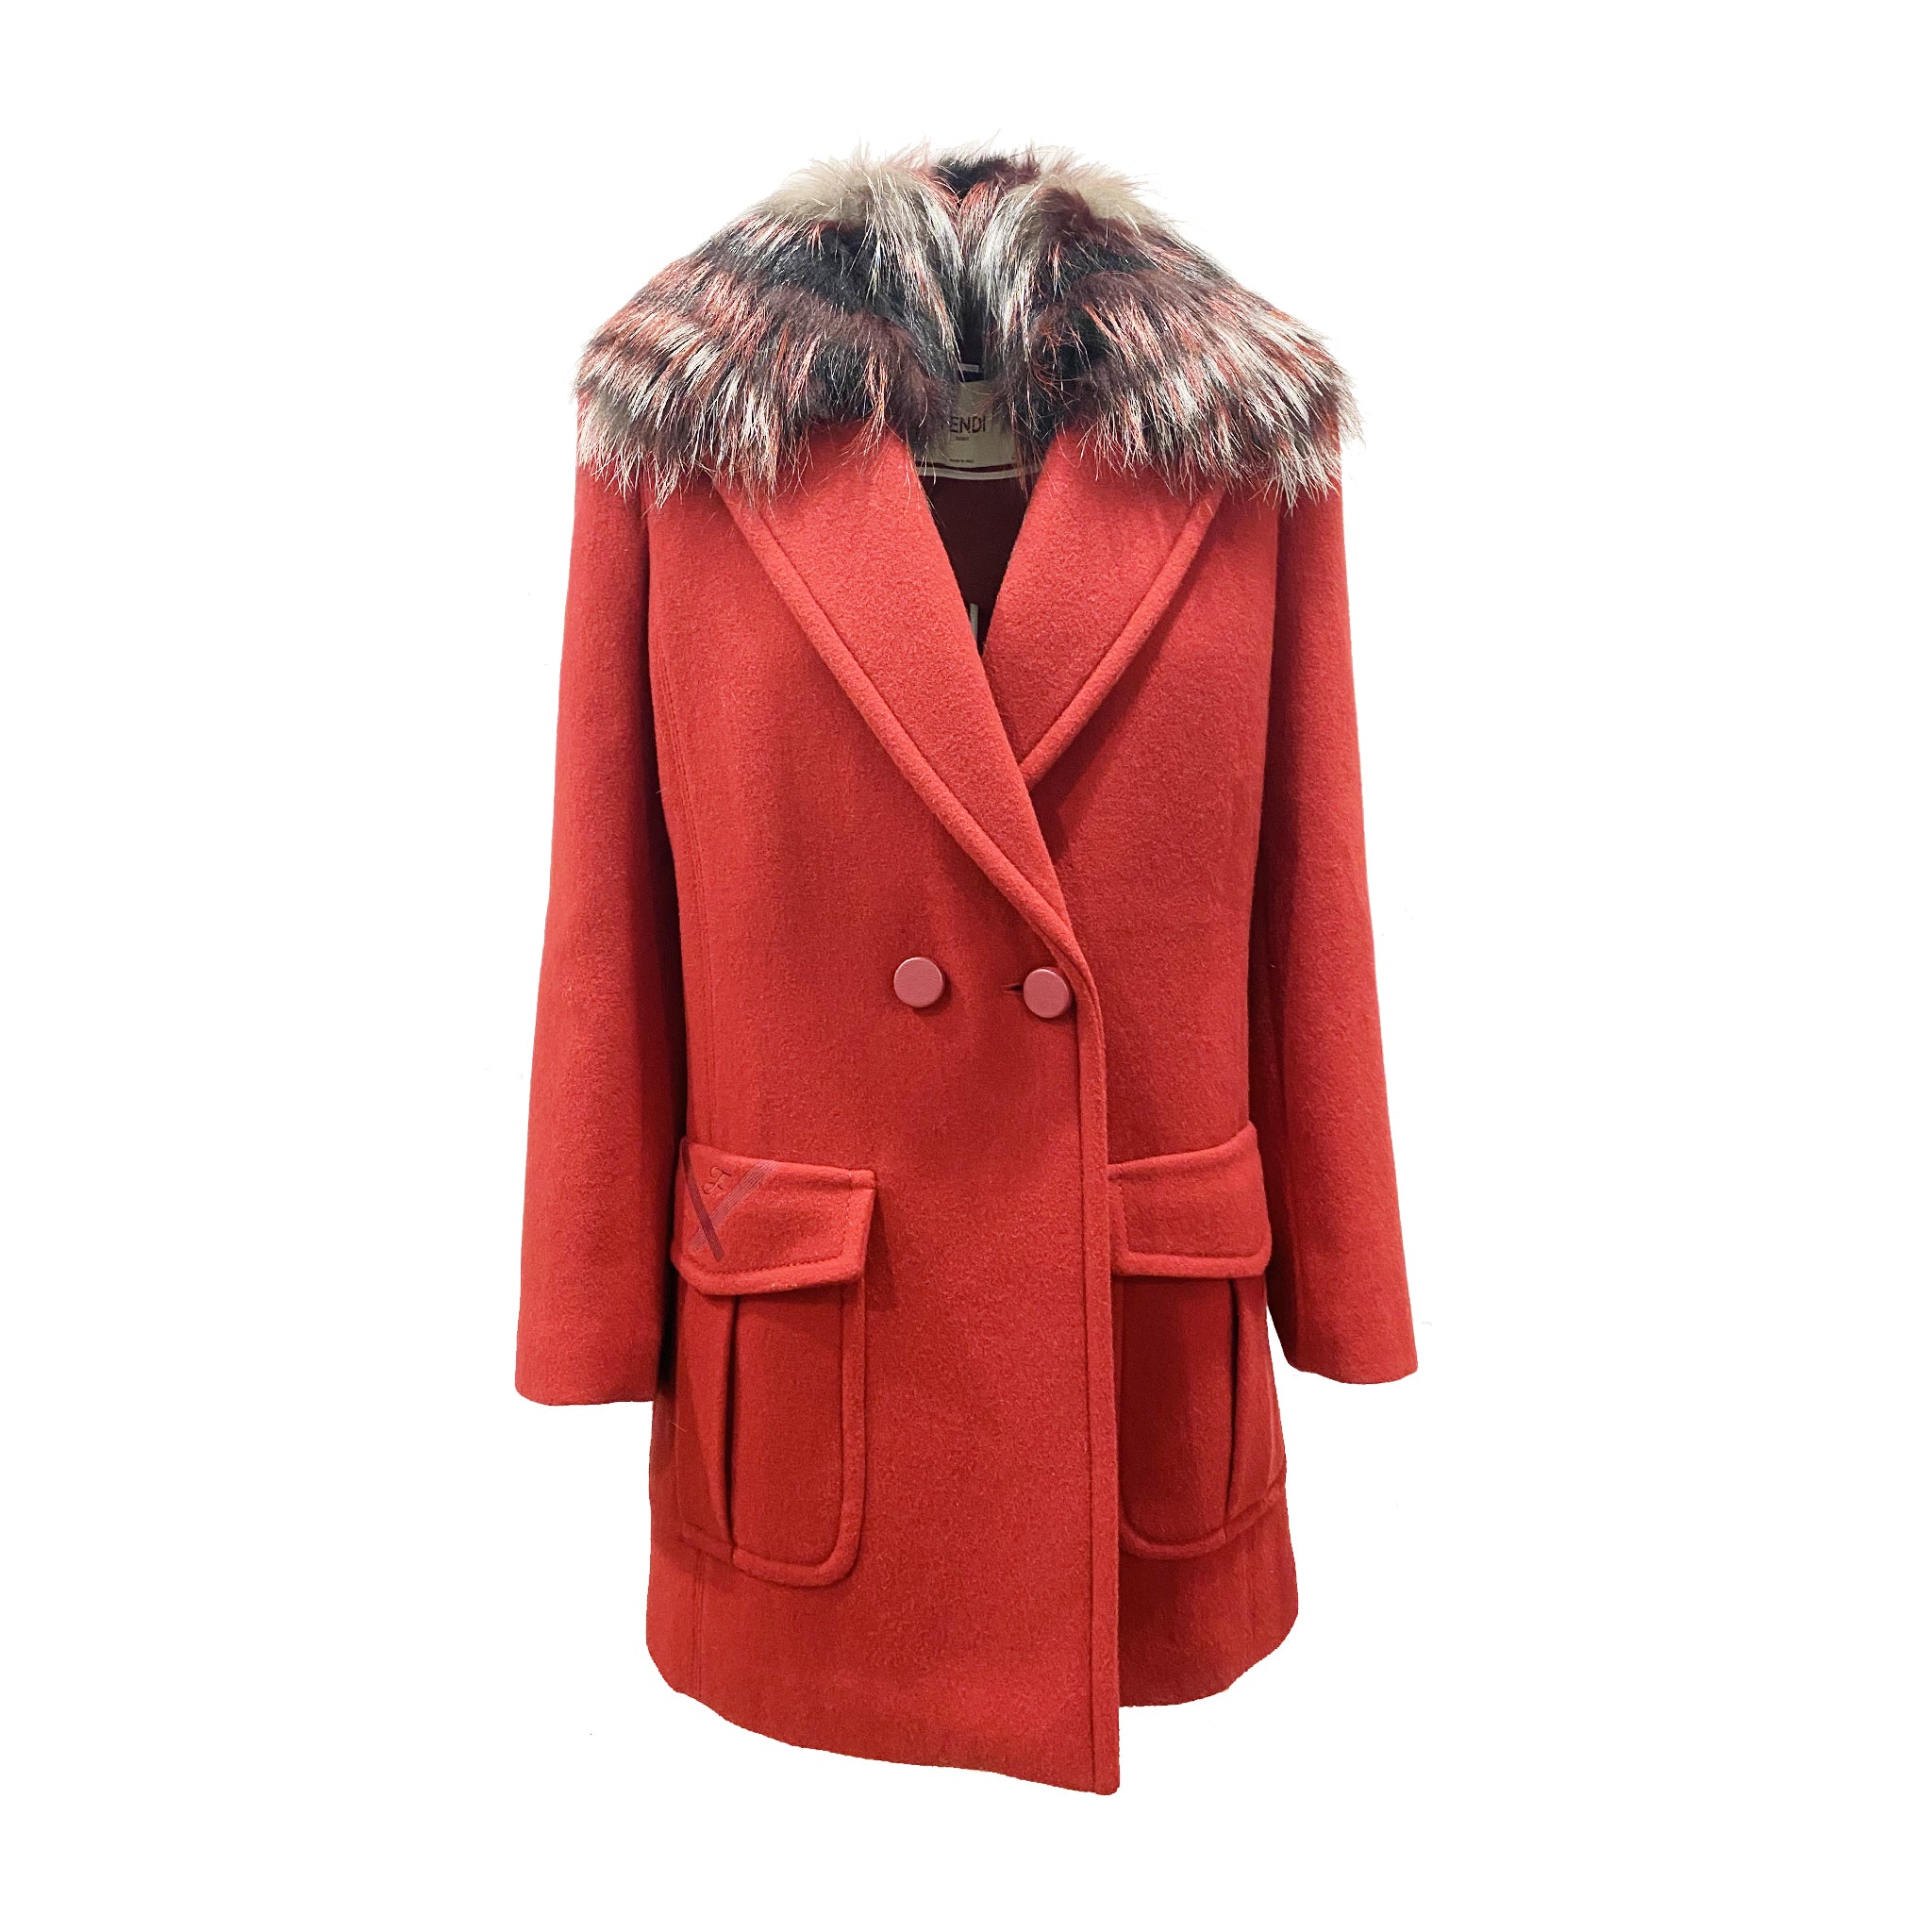 FENDI-OUTLET-SALE-Fendi-Fur-Collar-Wool-Coat-Jacken-Mantel-ARCHIVE-COLLECTION.jpg